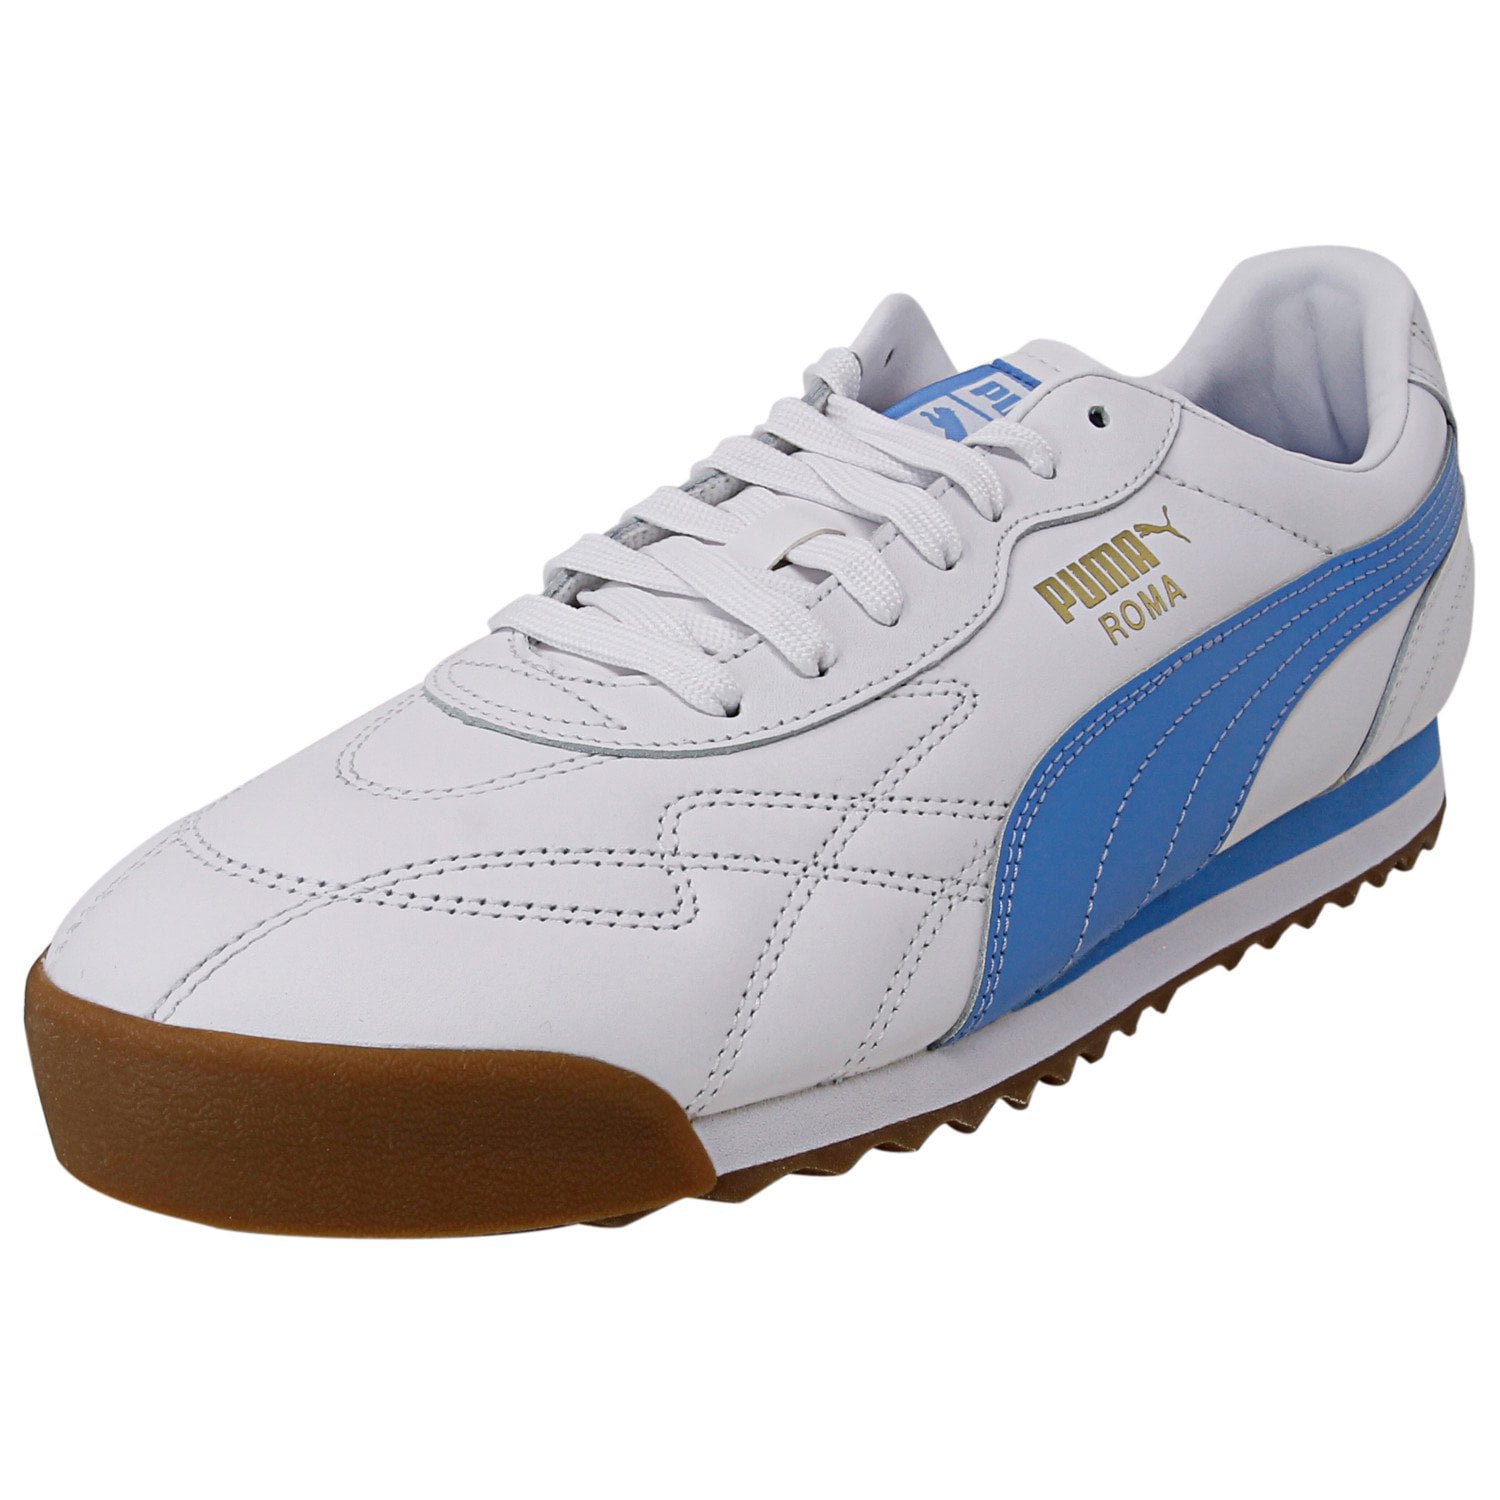 Puma Men's Roma Anniversario White / Azure Blue Ankle-High Leather ...